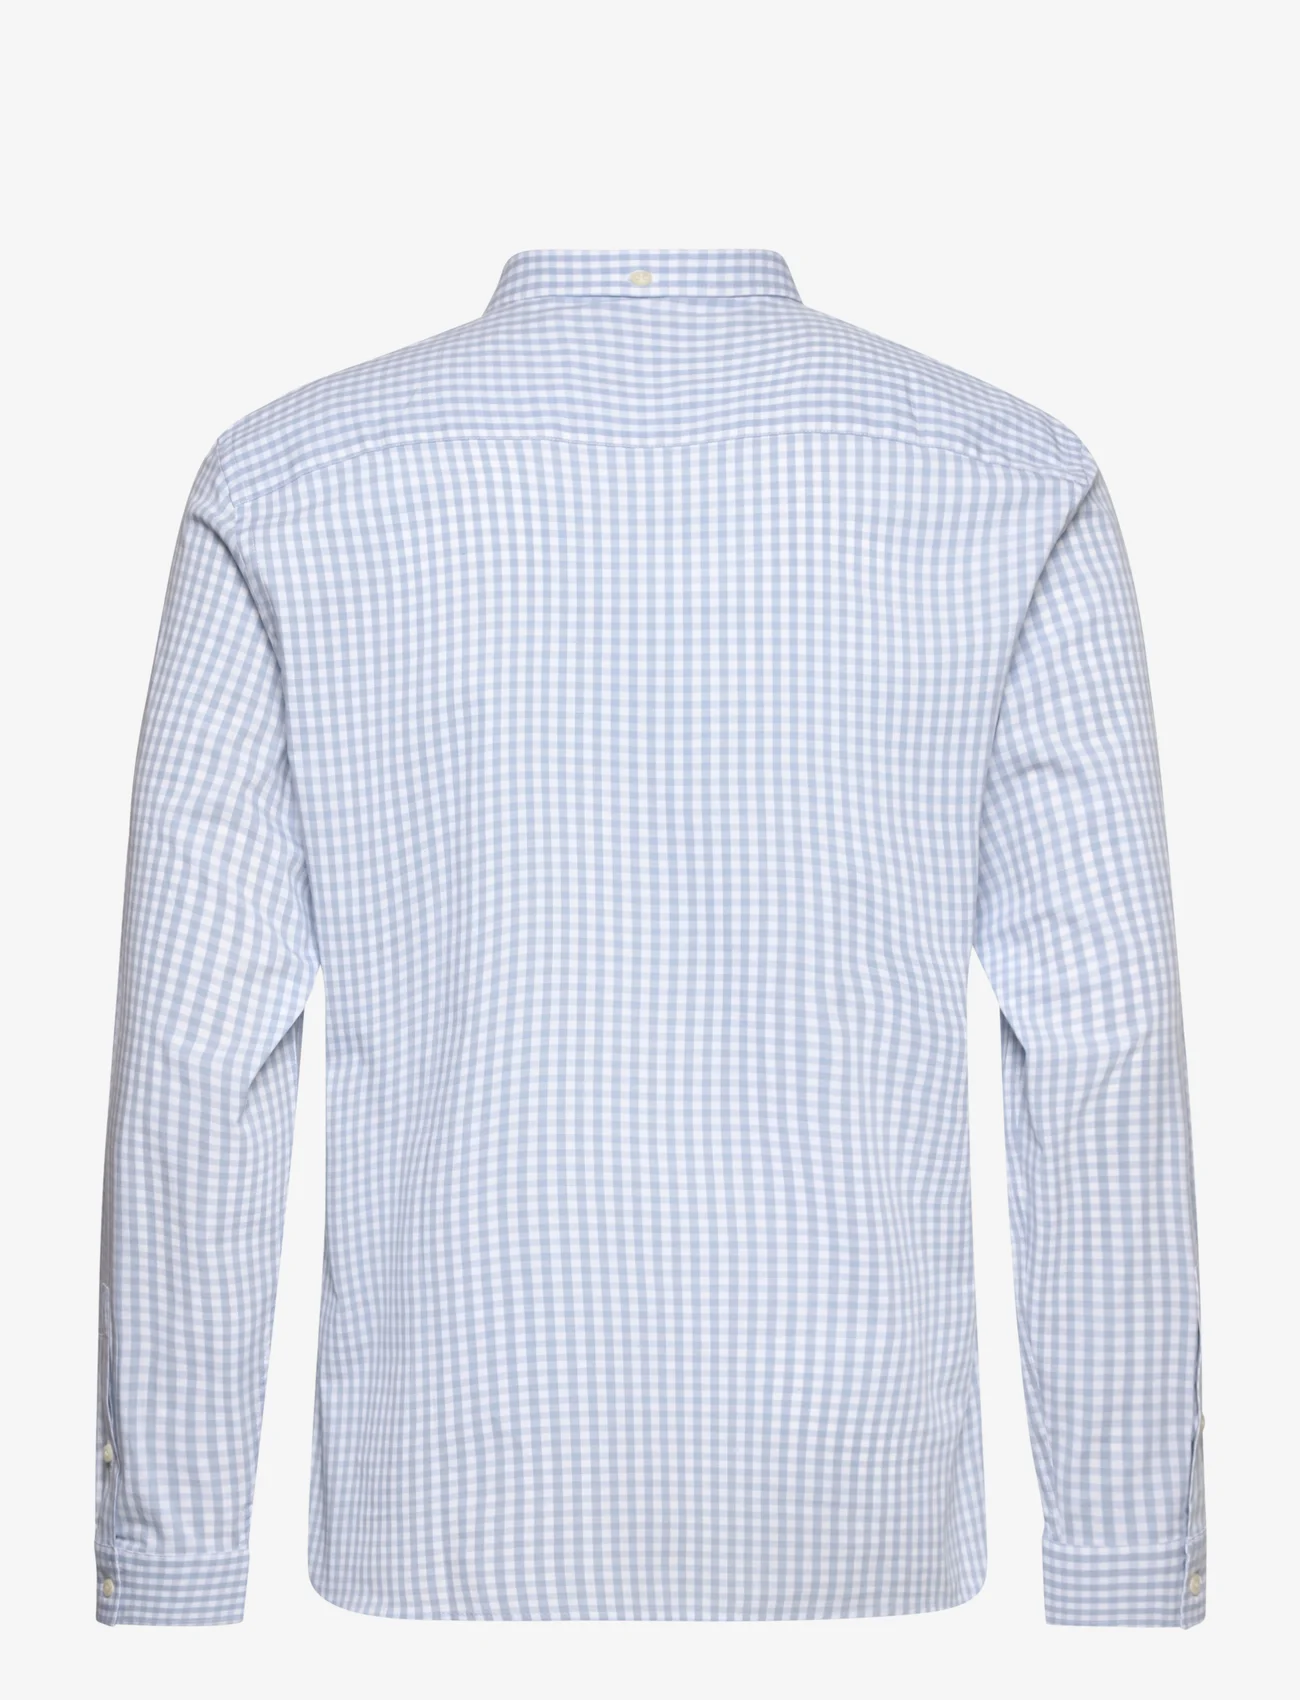 Lyle & Scott - LS Slim Fit Gingham Shirt - rutiga skjortor - light blue/ white - 1